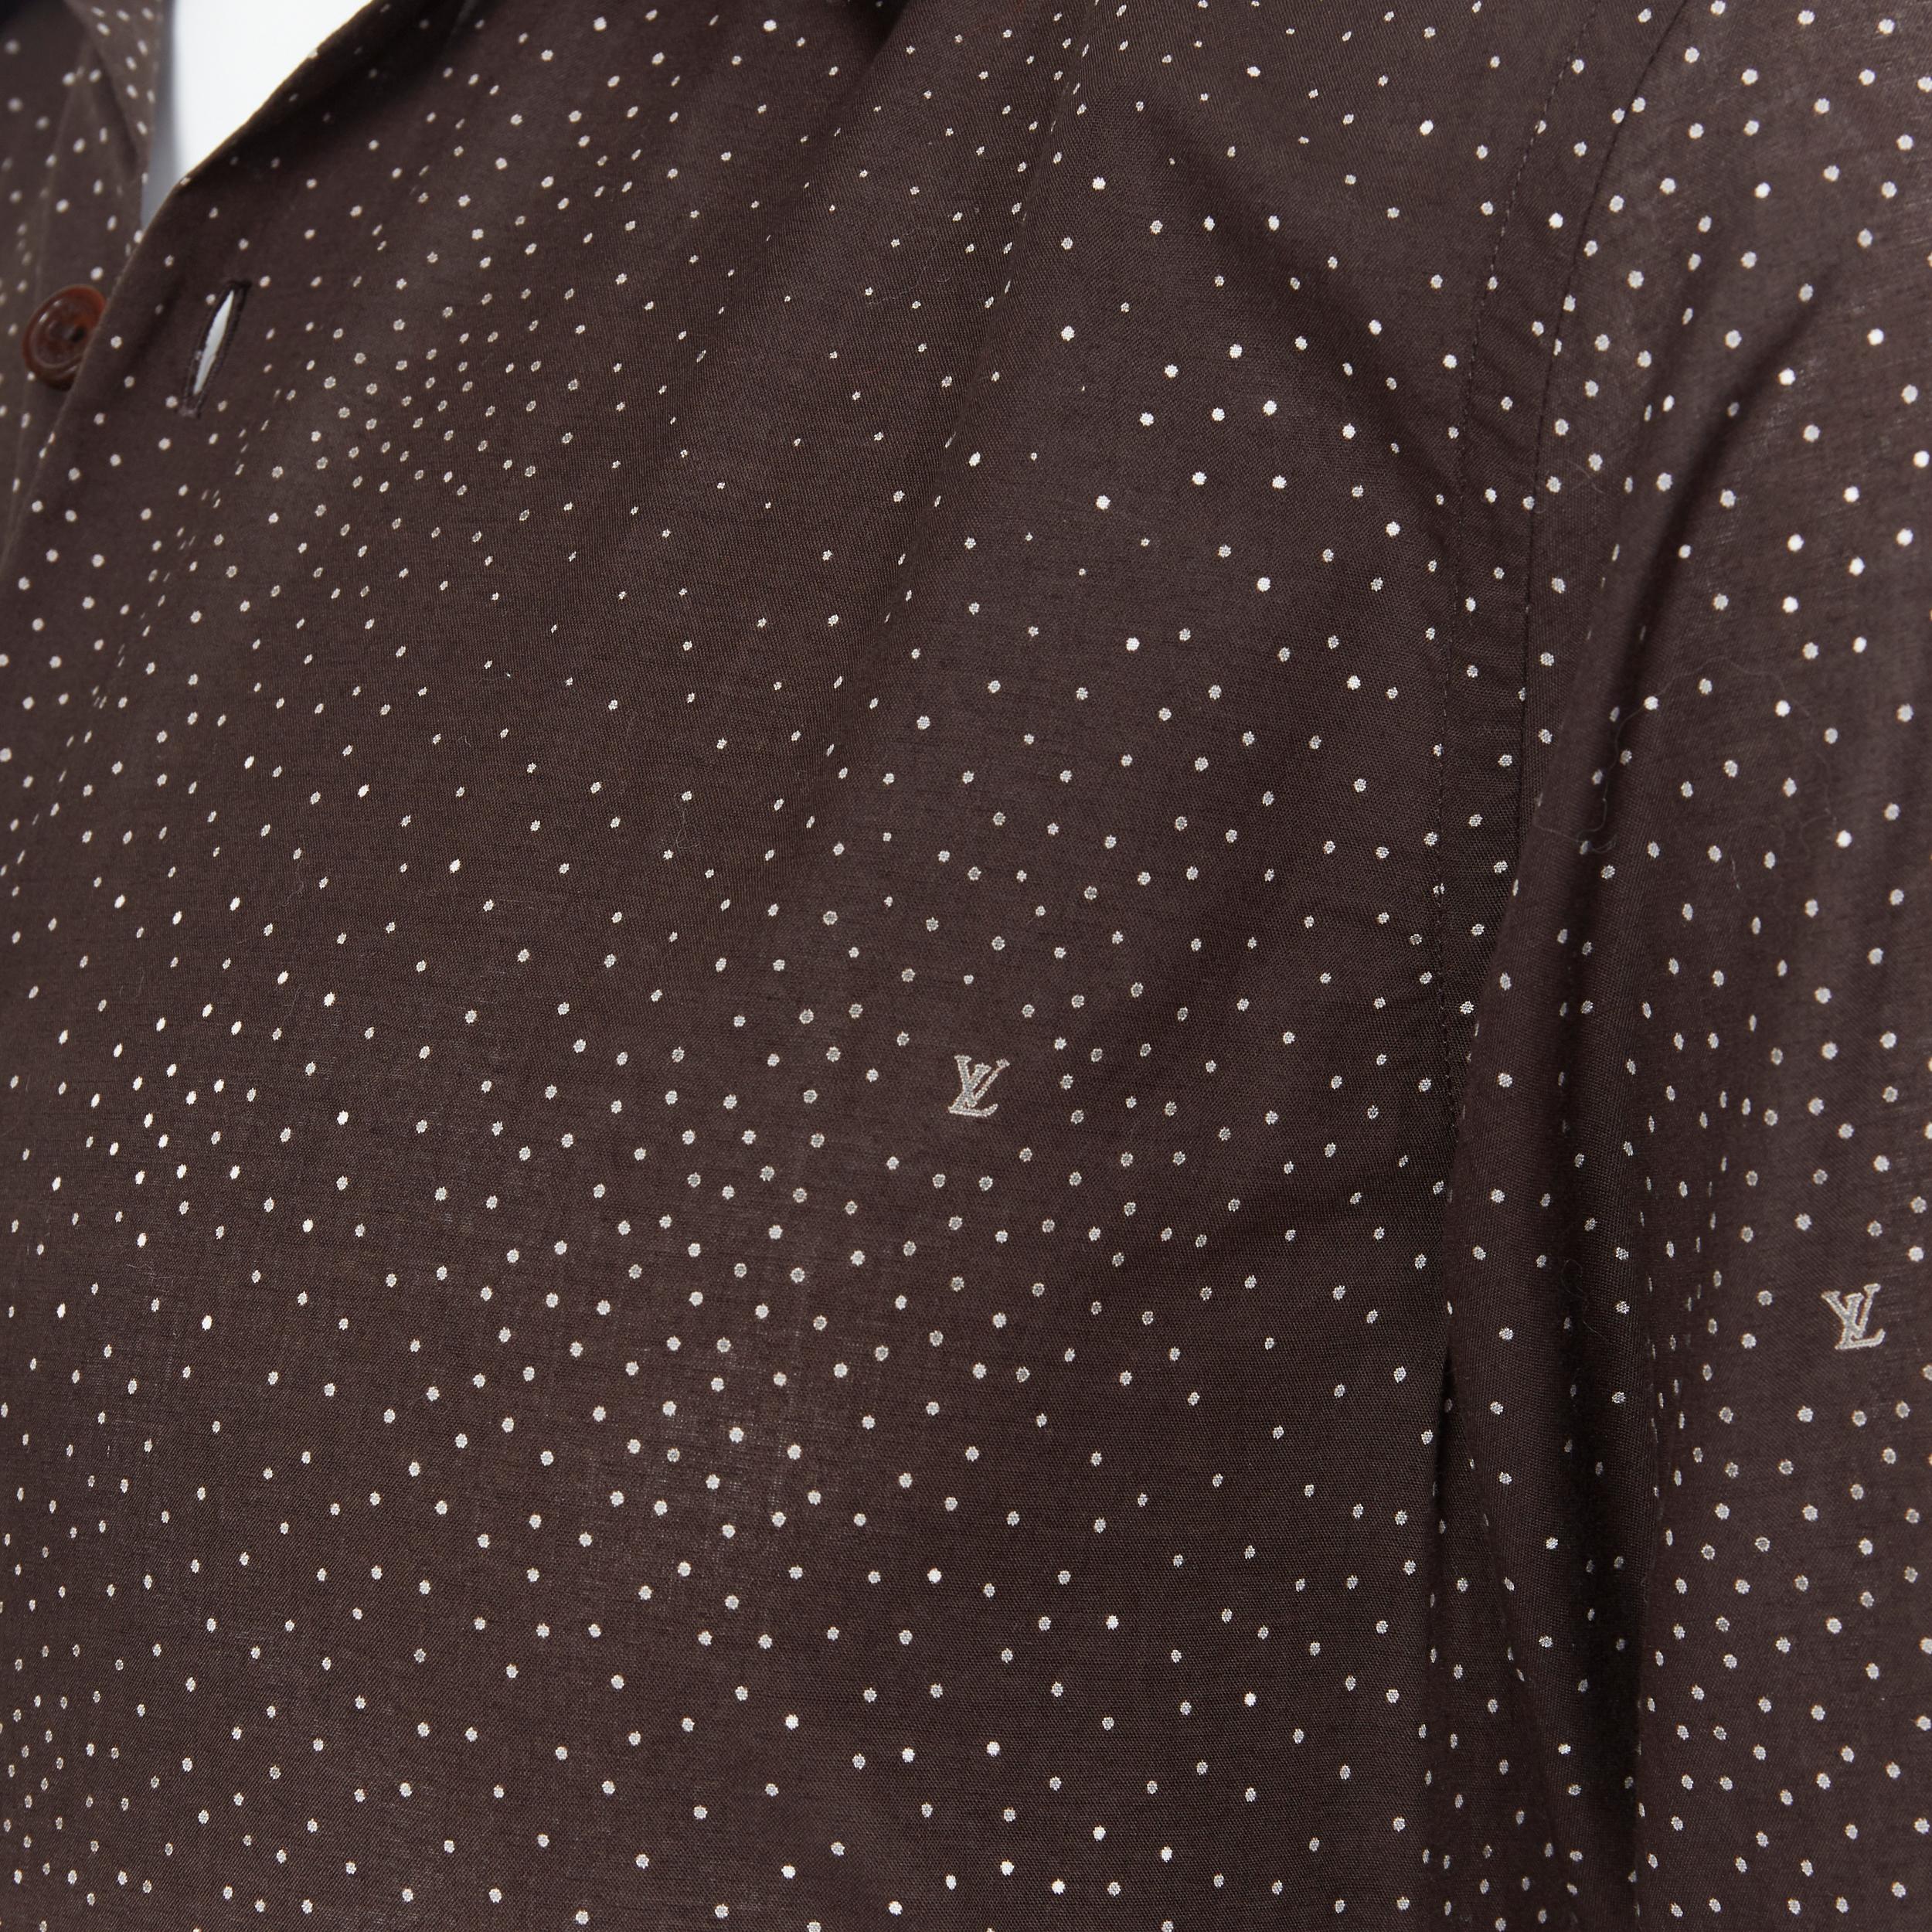 Men's LOUIS VUITTON brown cotton spot LV monogram print slim fit shirt EU39